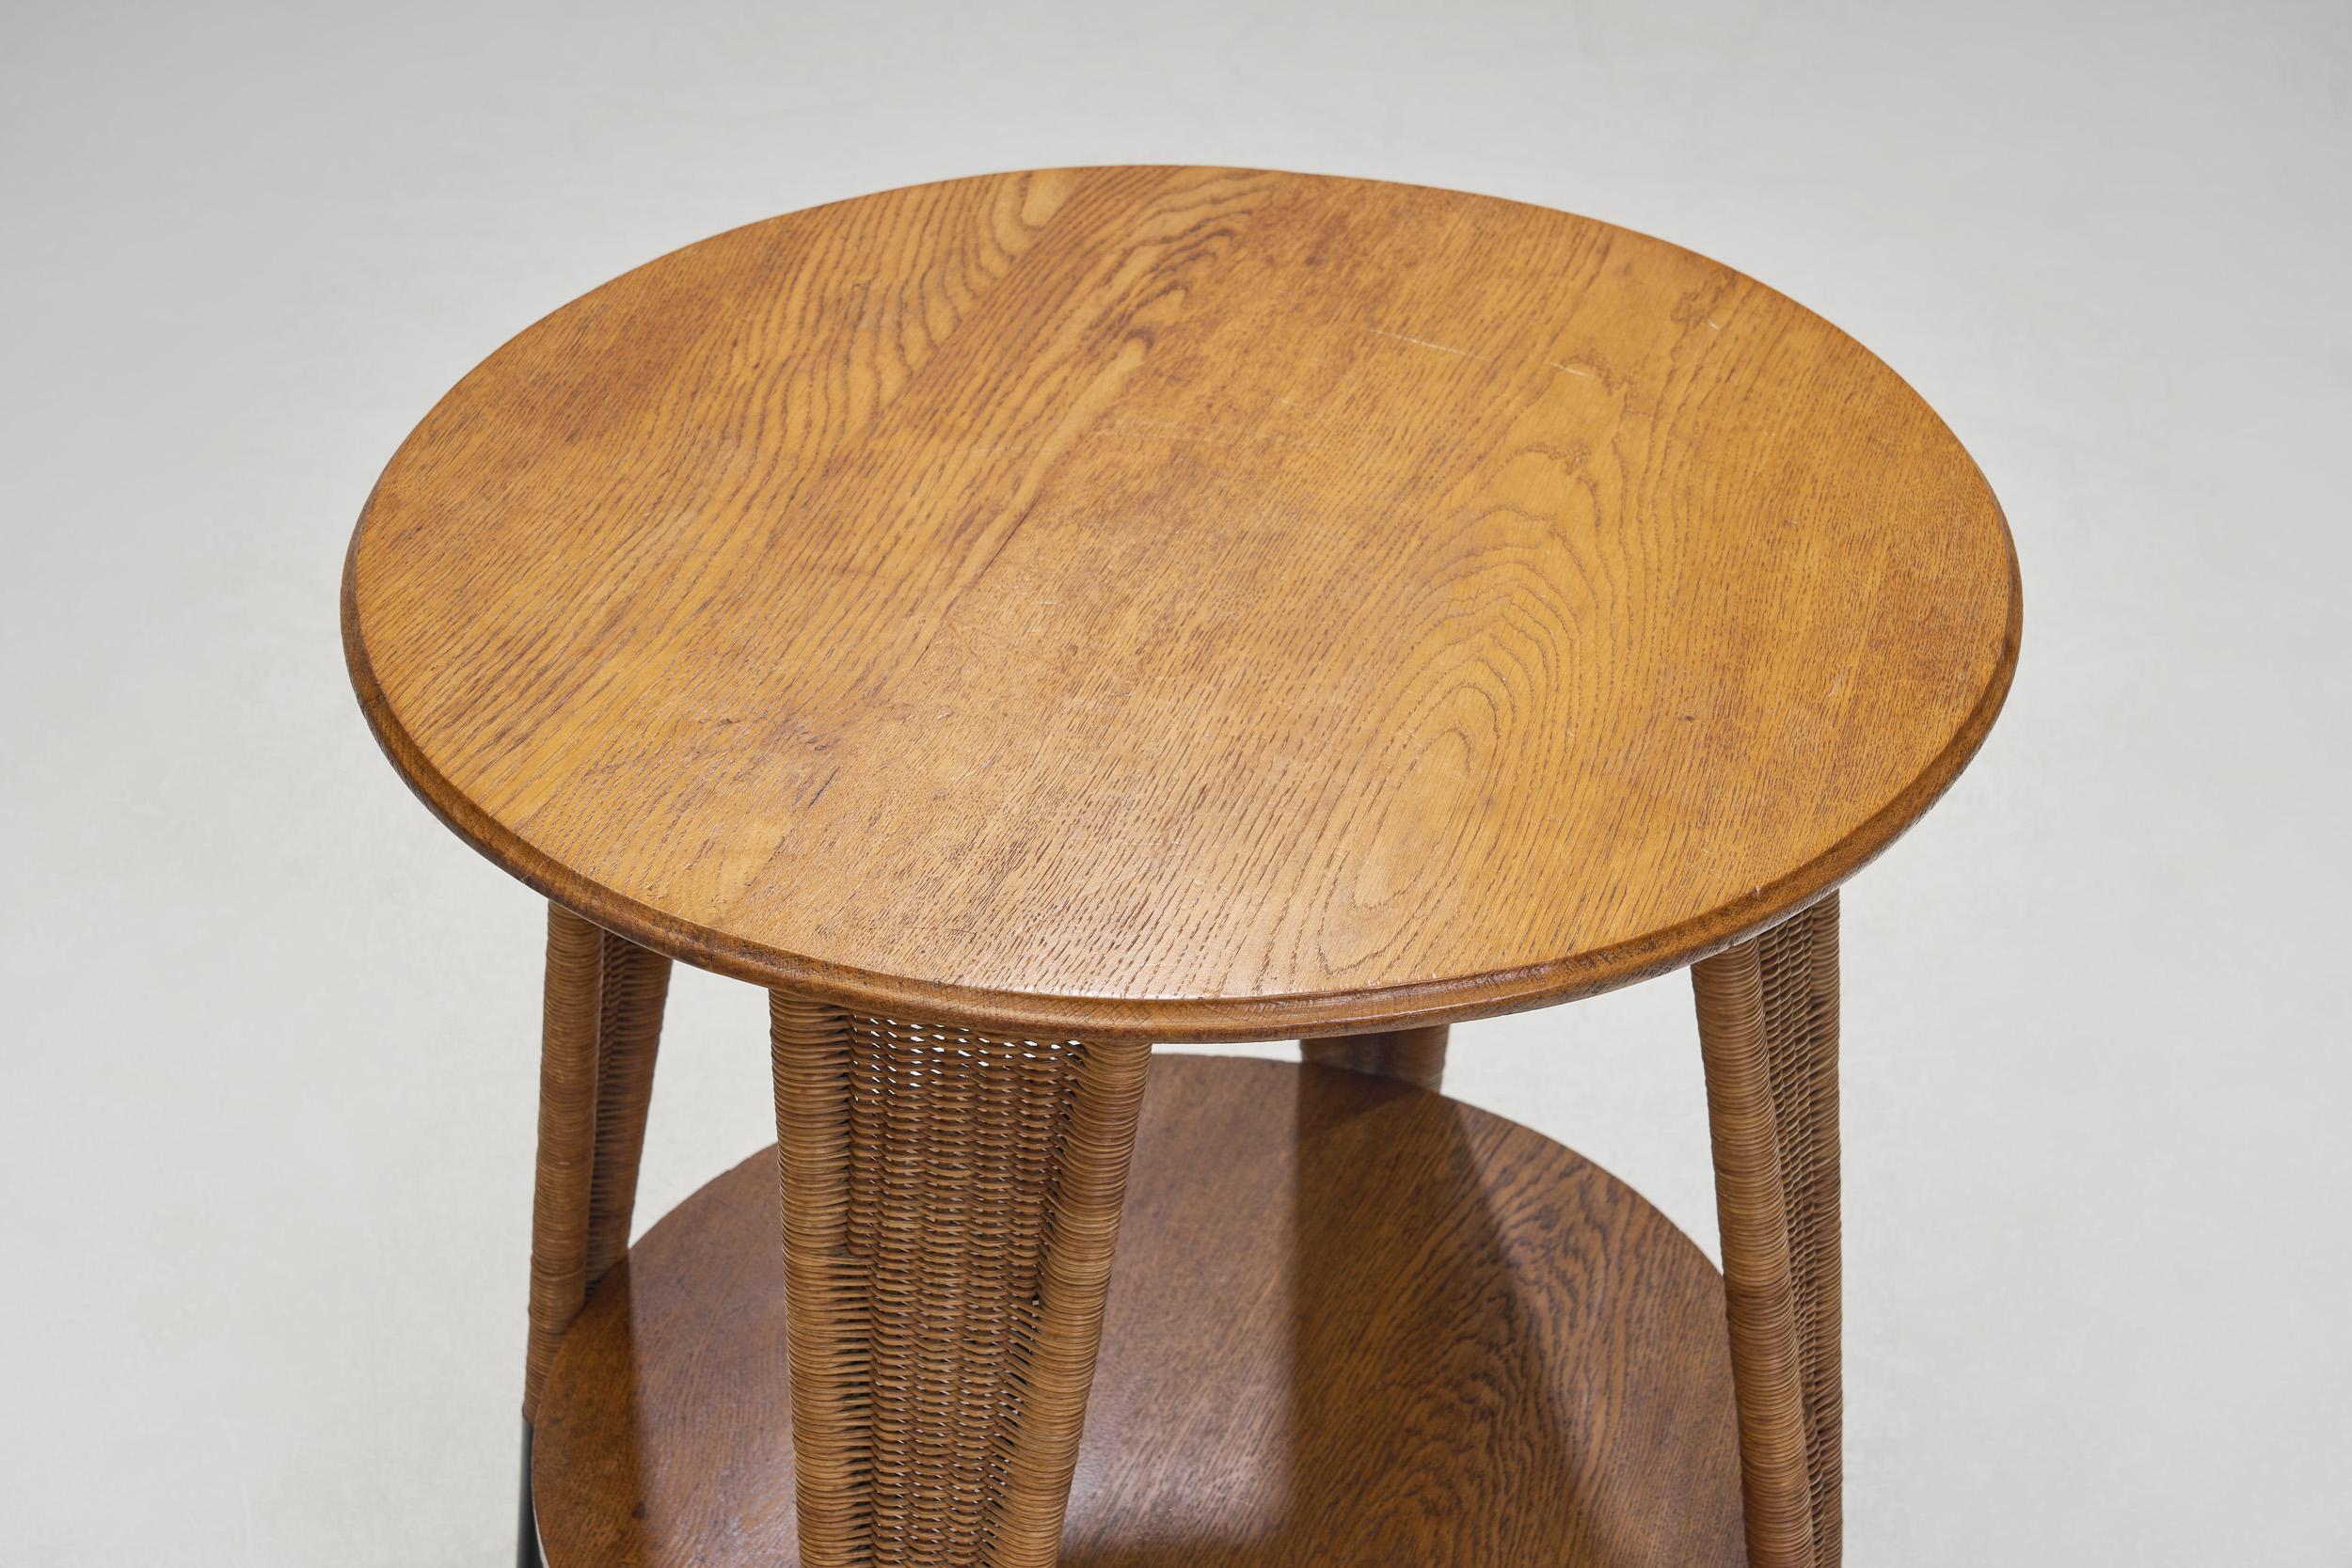 Circular Oak Coffee Table With Wicker Legs, Europe 20th Century 2